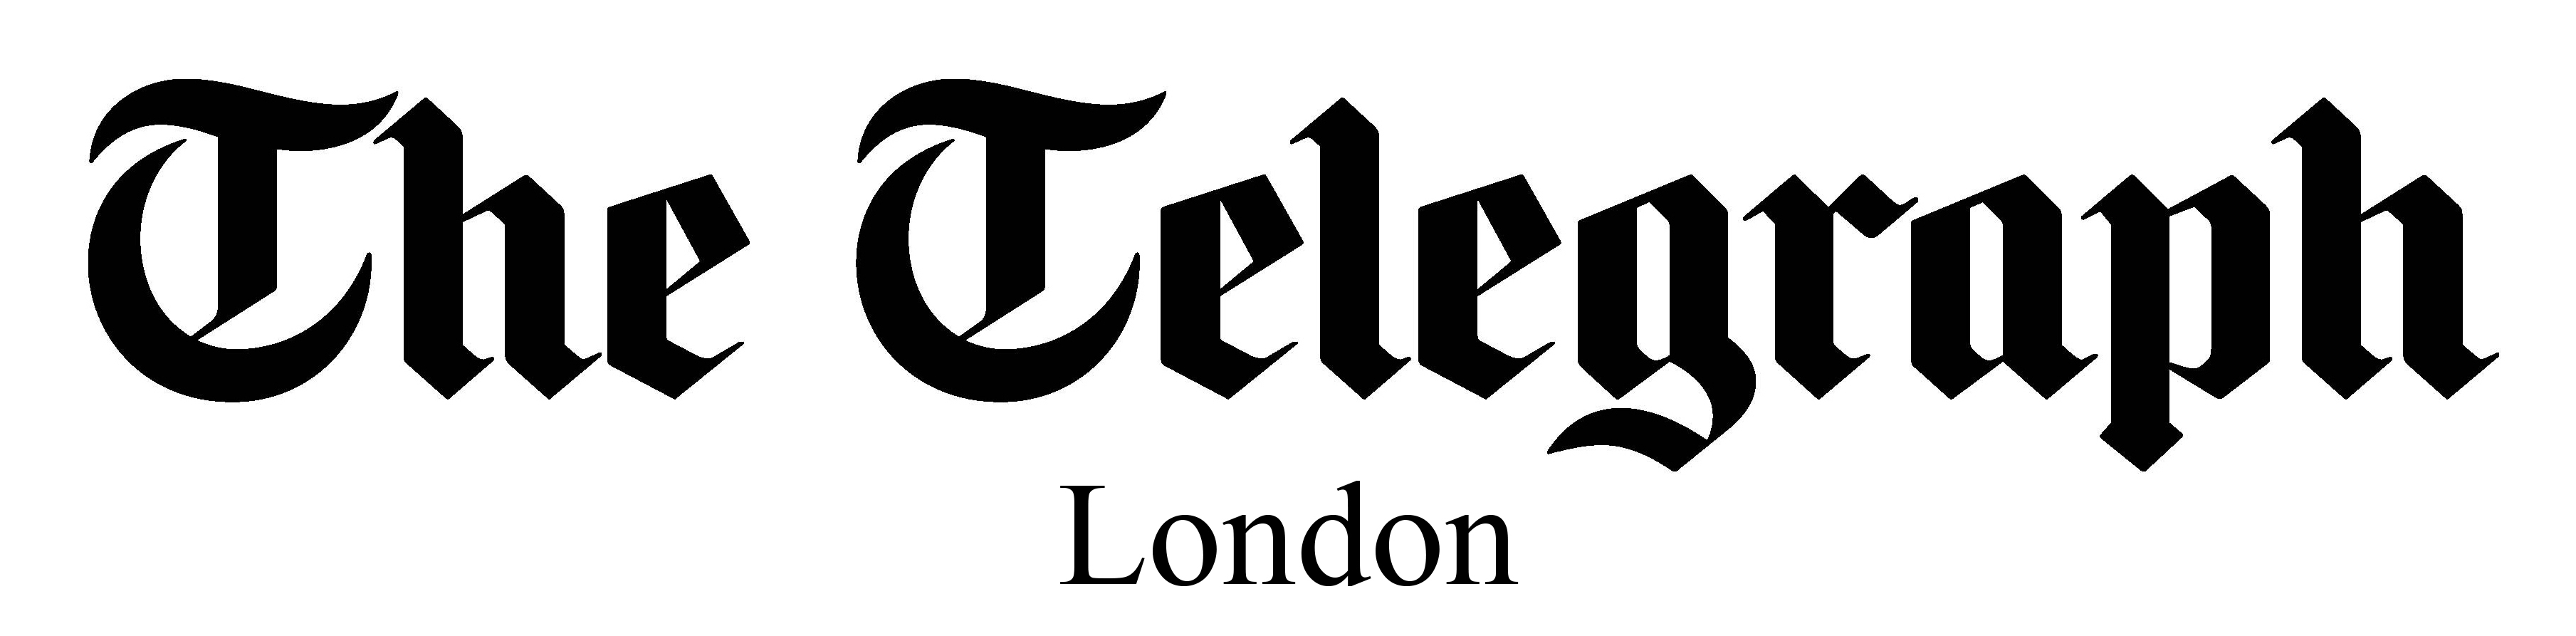 The Telegraph London